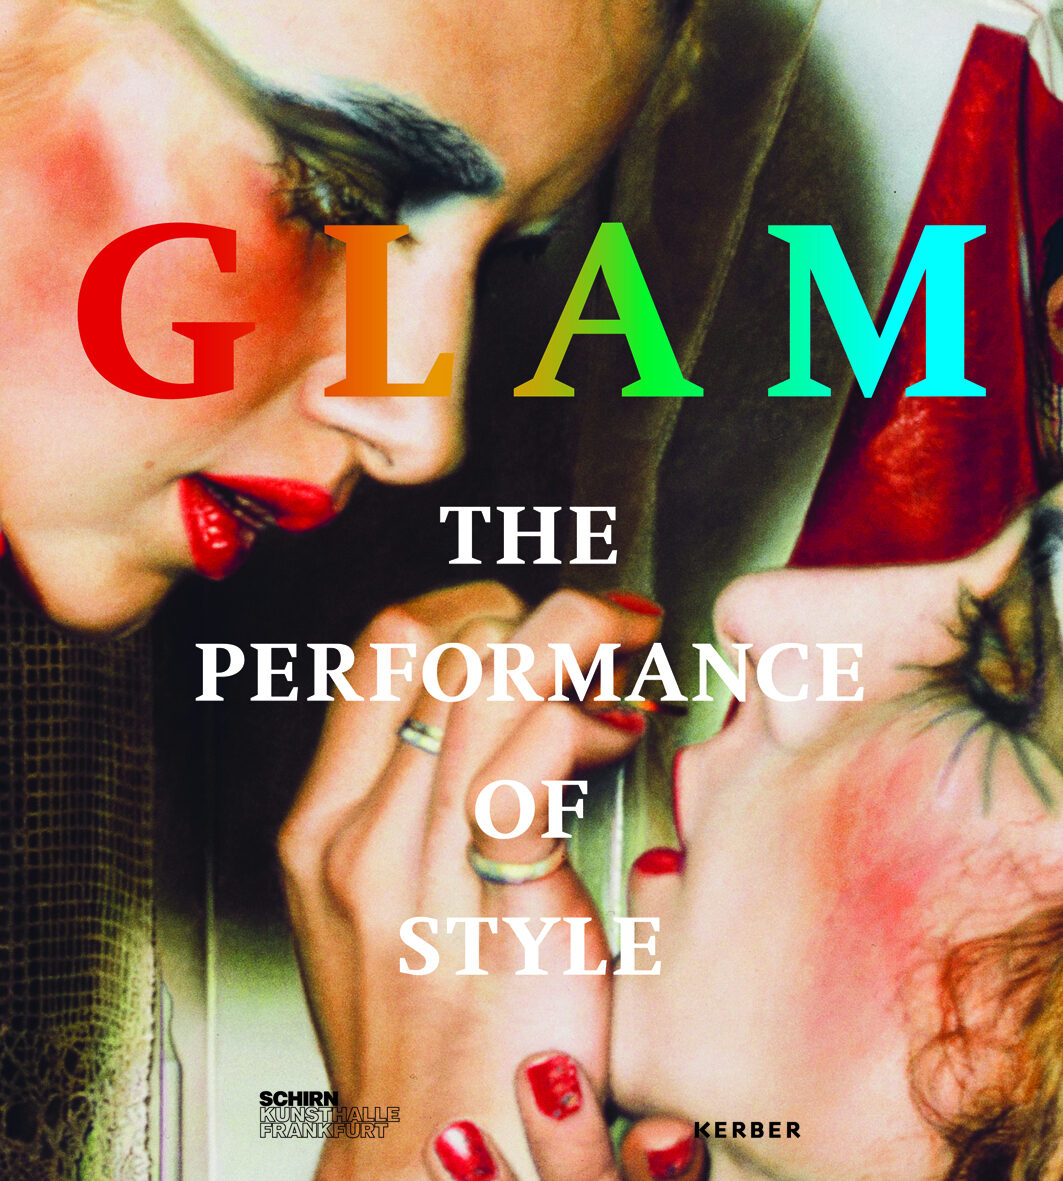 glam the performance of style, darren pih, max hollein, kunstbuch bildband fotobuch ausstellungskatalog